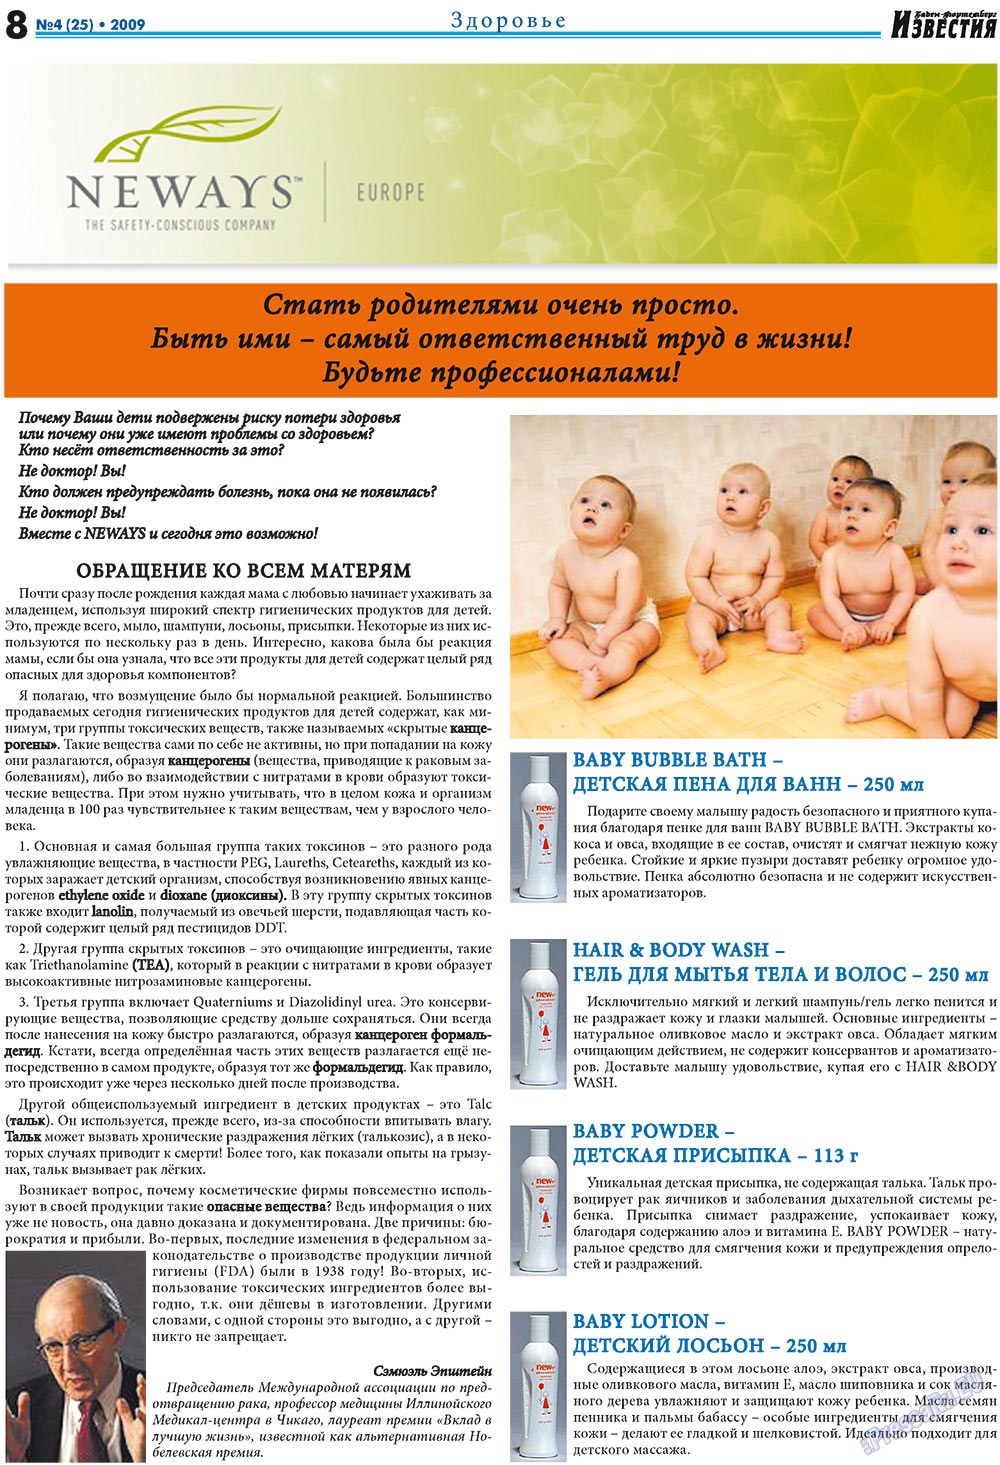 Известия BW (газета). 2009 год, номер 4, стр. 8